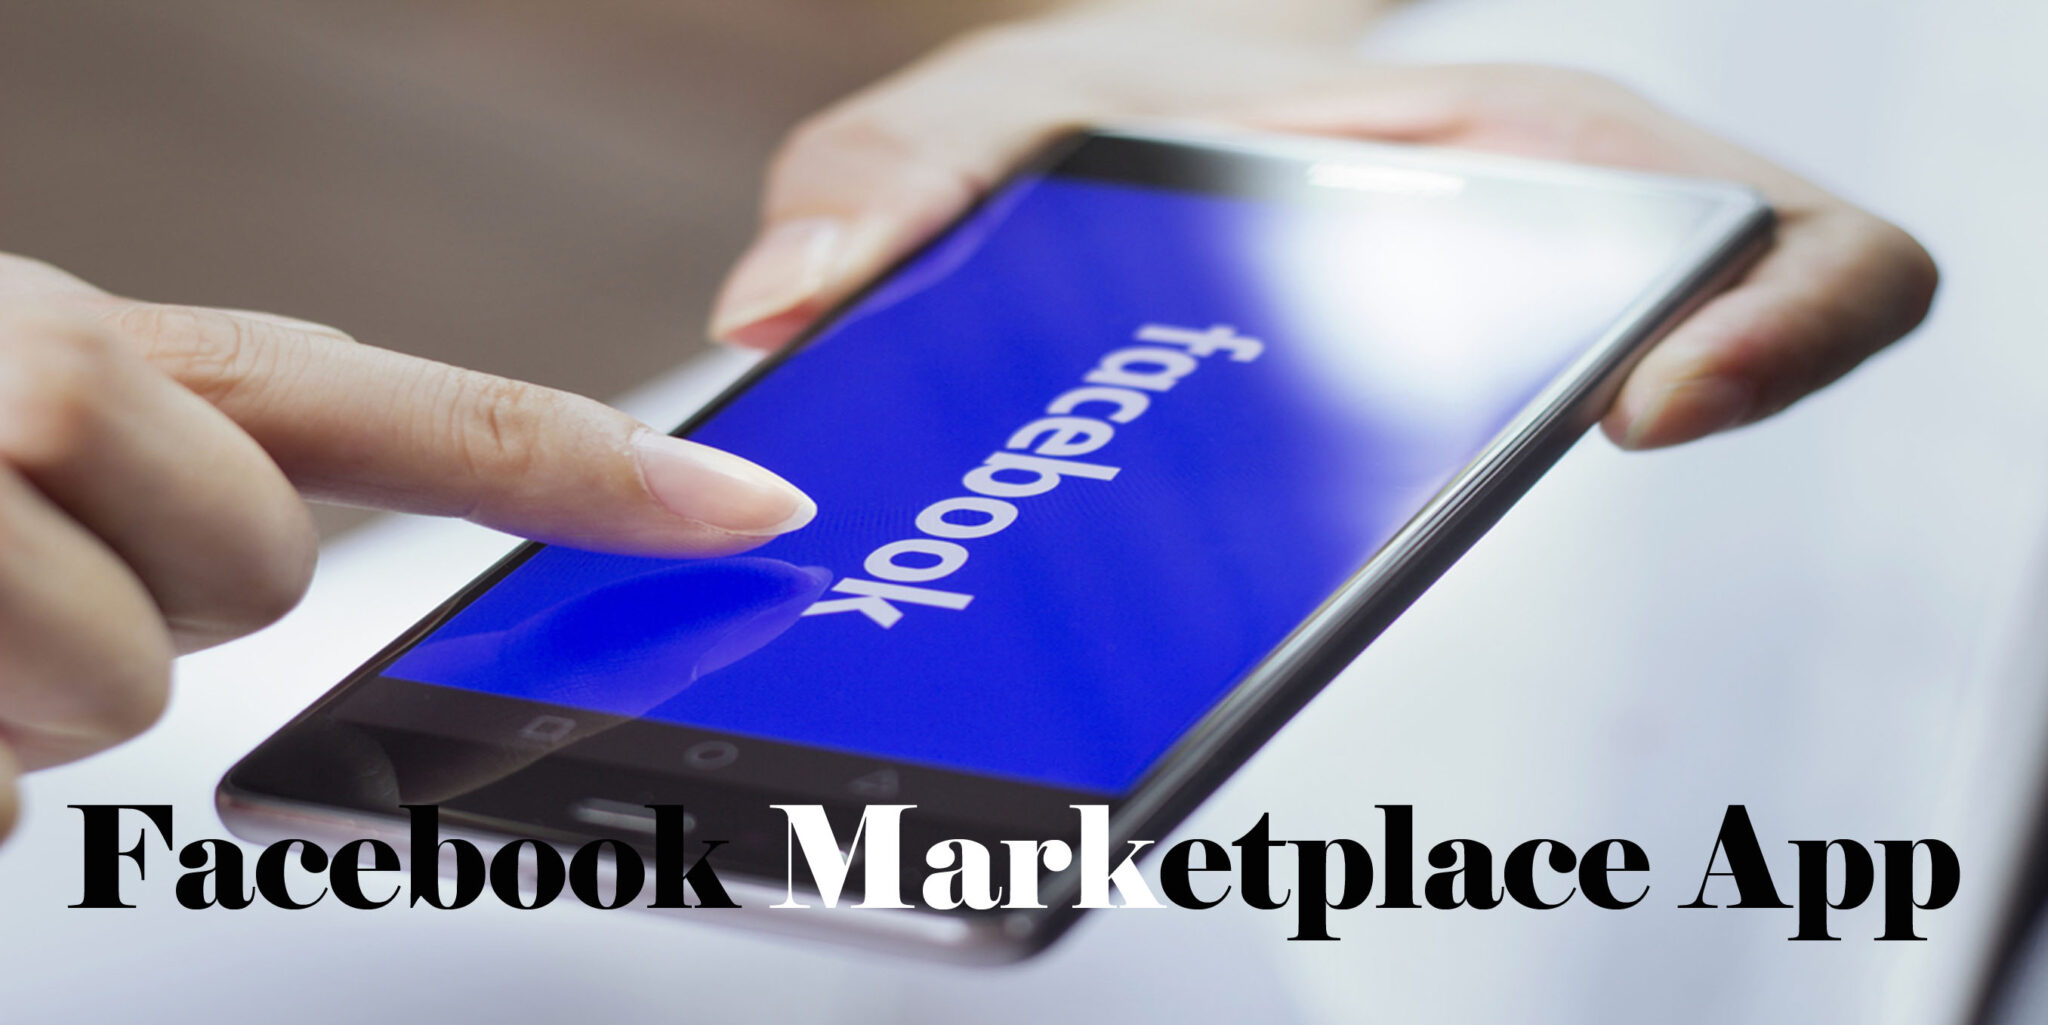 Facebook Marketplace App - Facebook Trading Platform